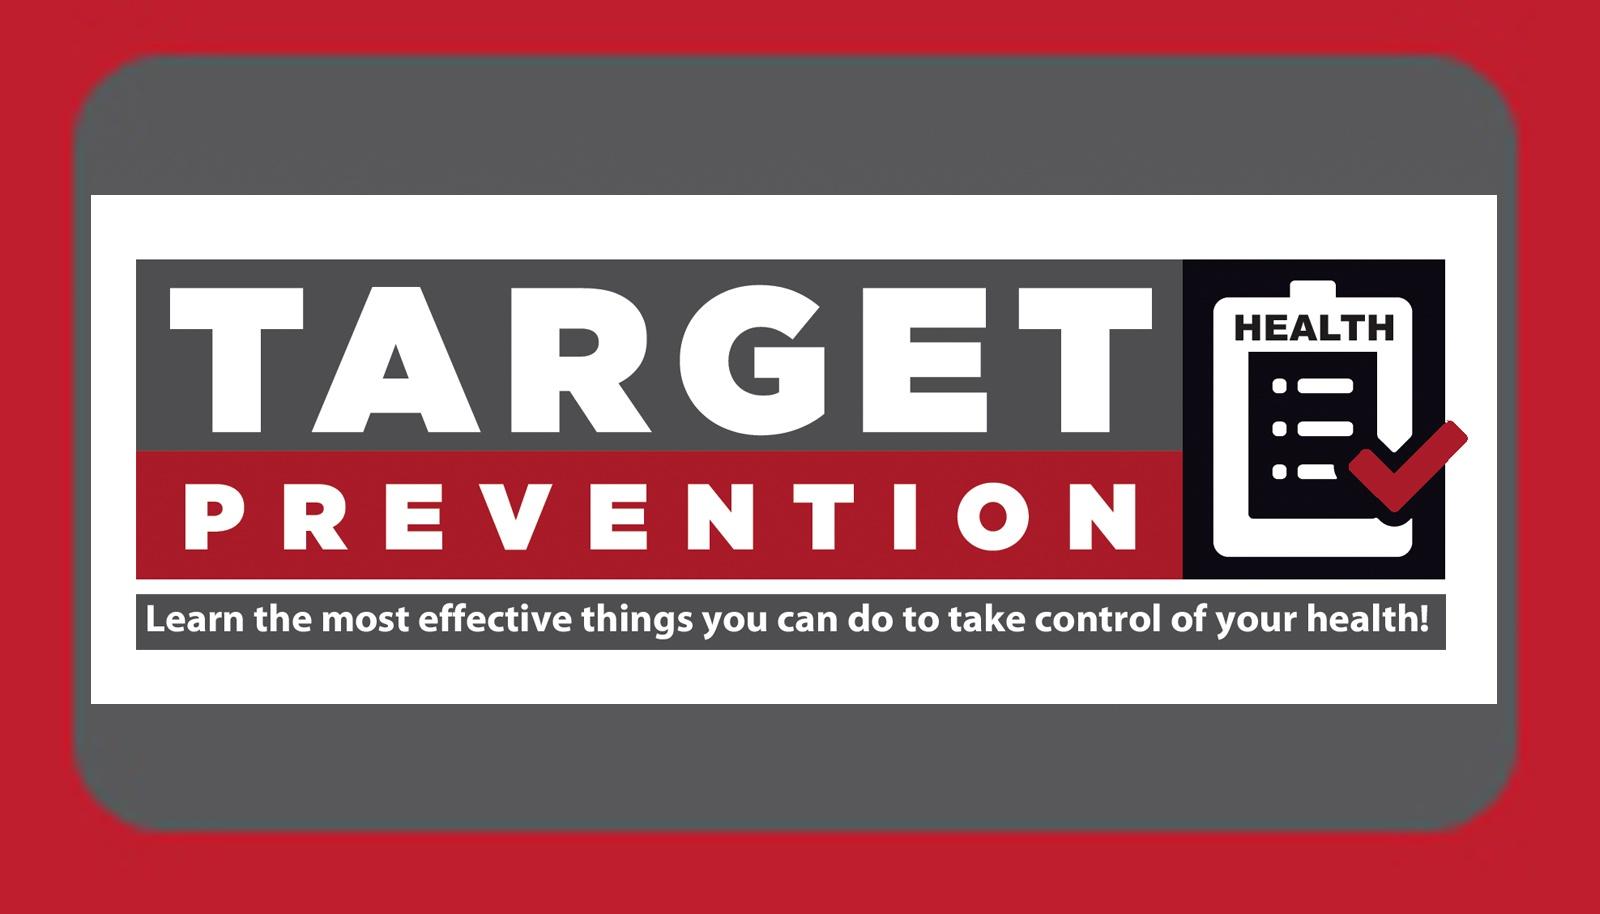 Menu selection-Target Prevention Home